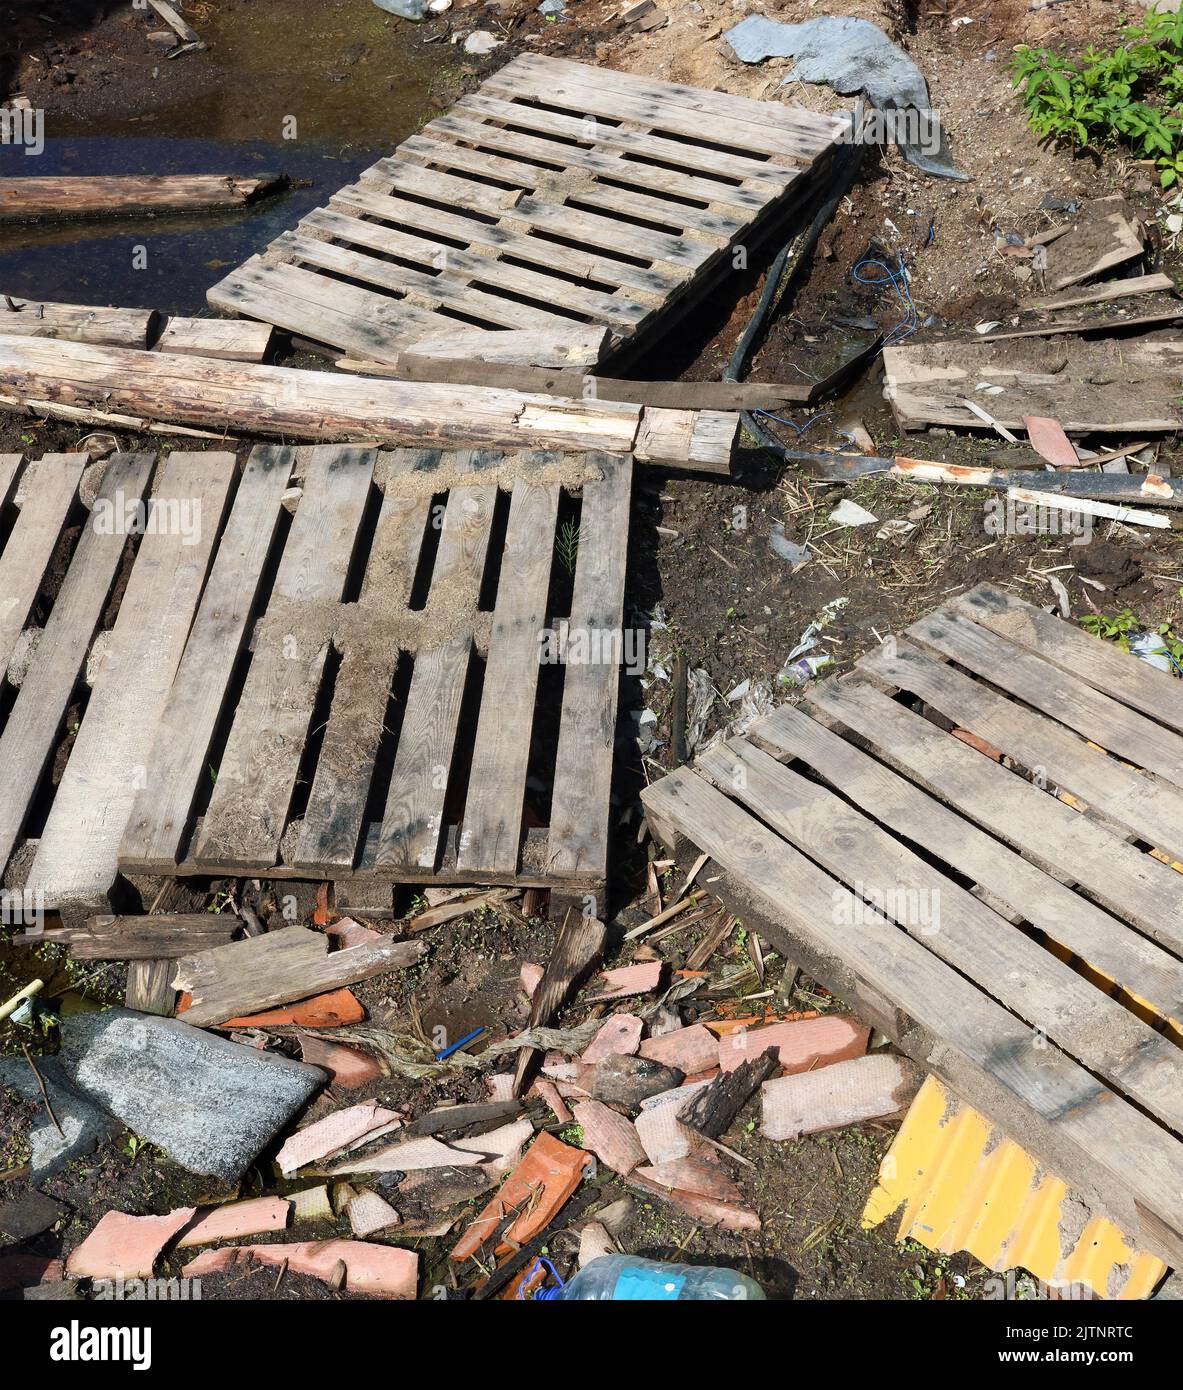 Old broken wooden pallets in a garbage  dump Stock Photo